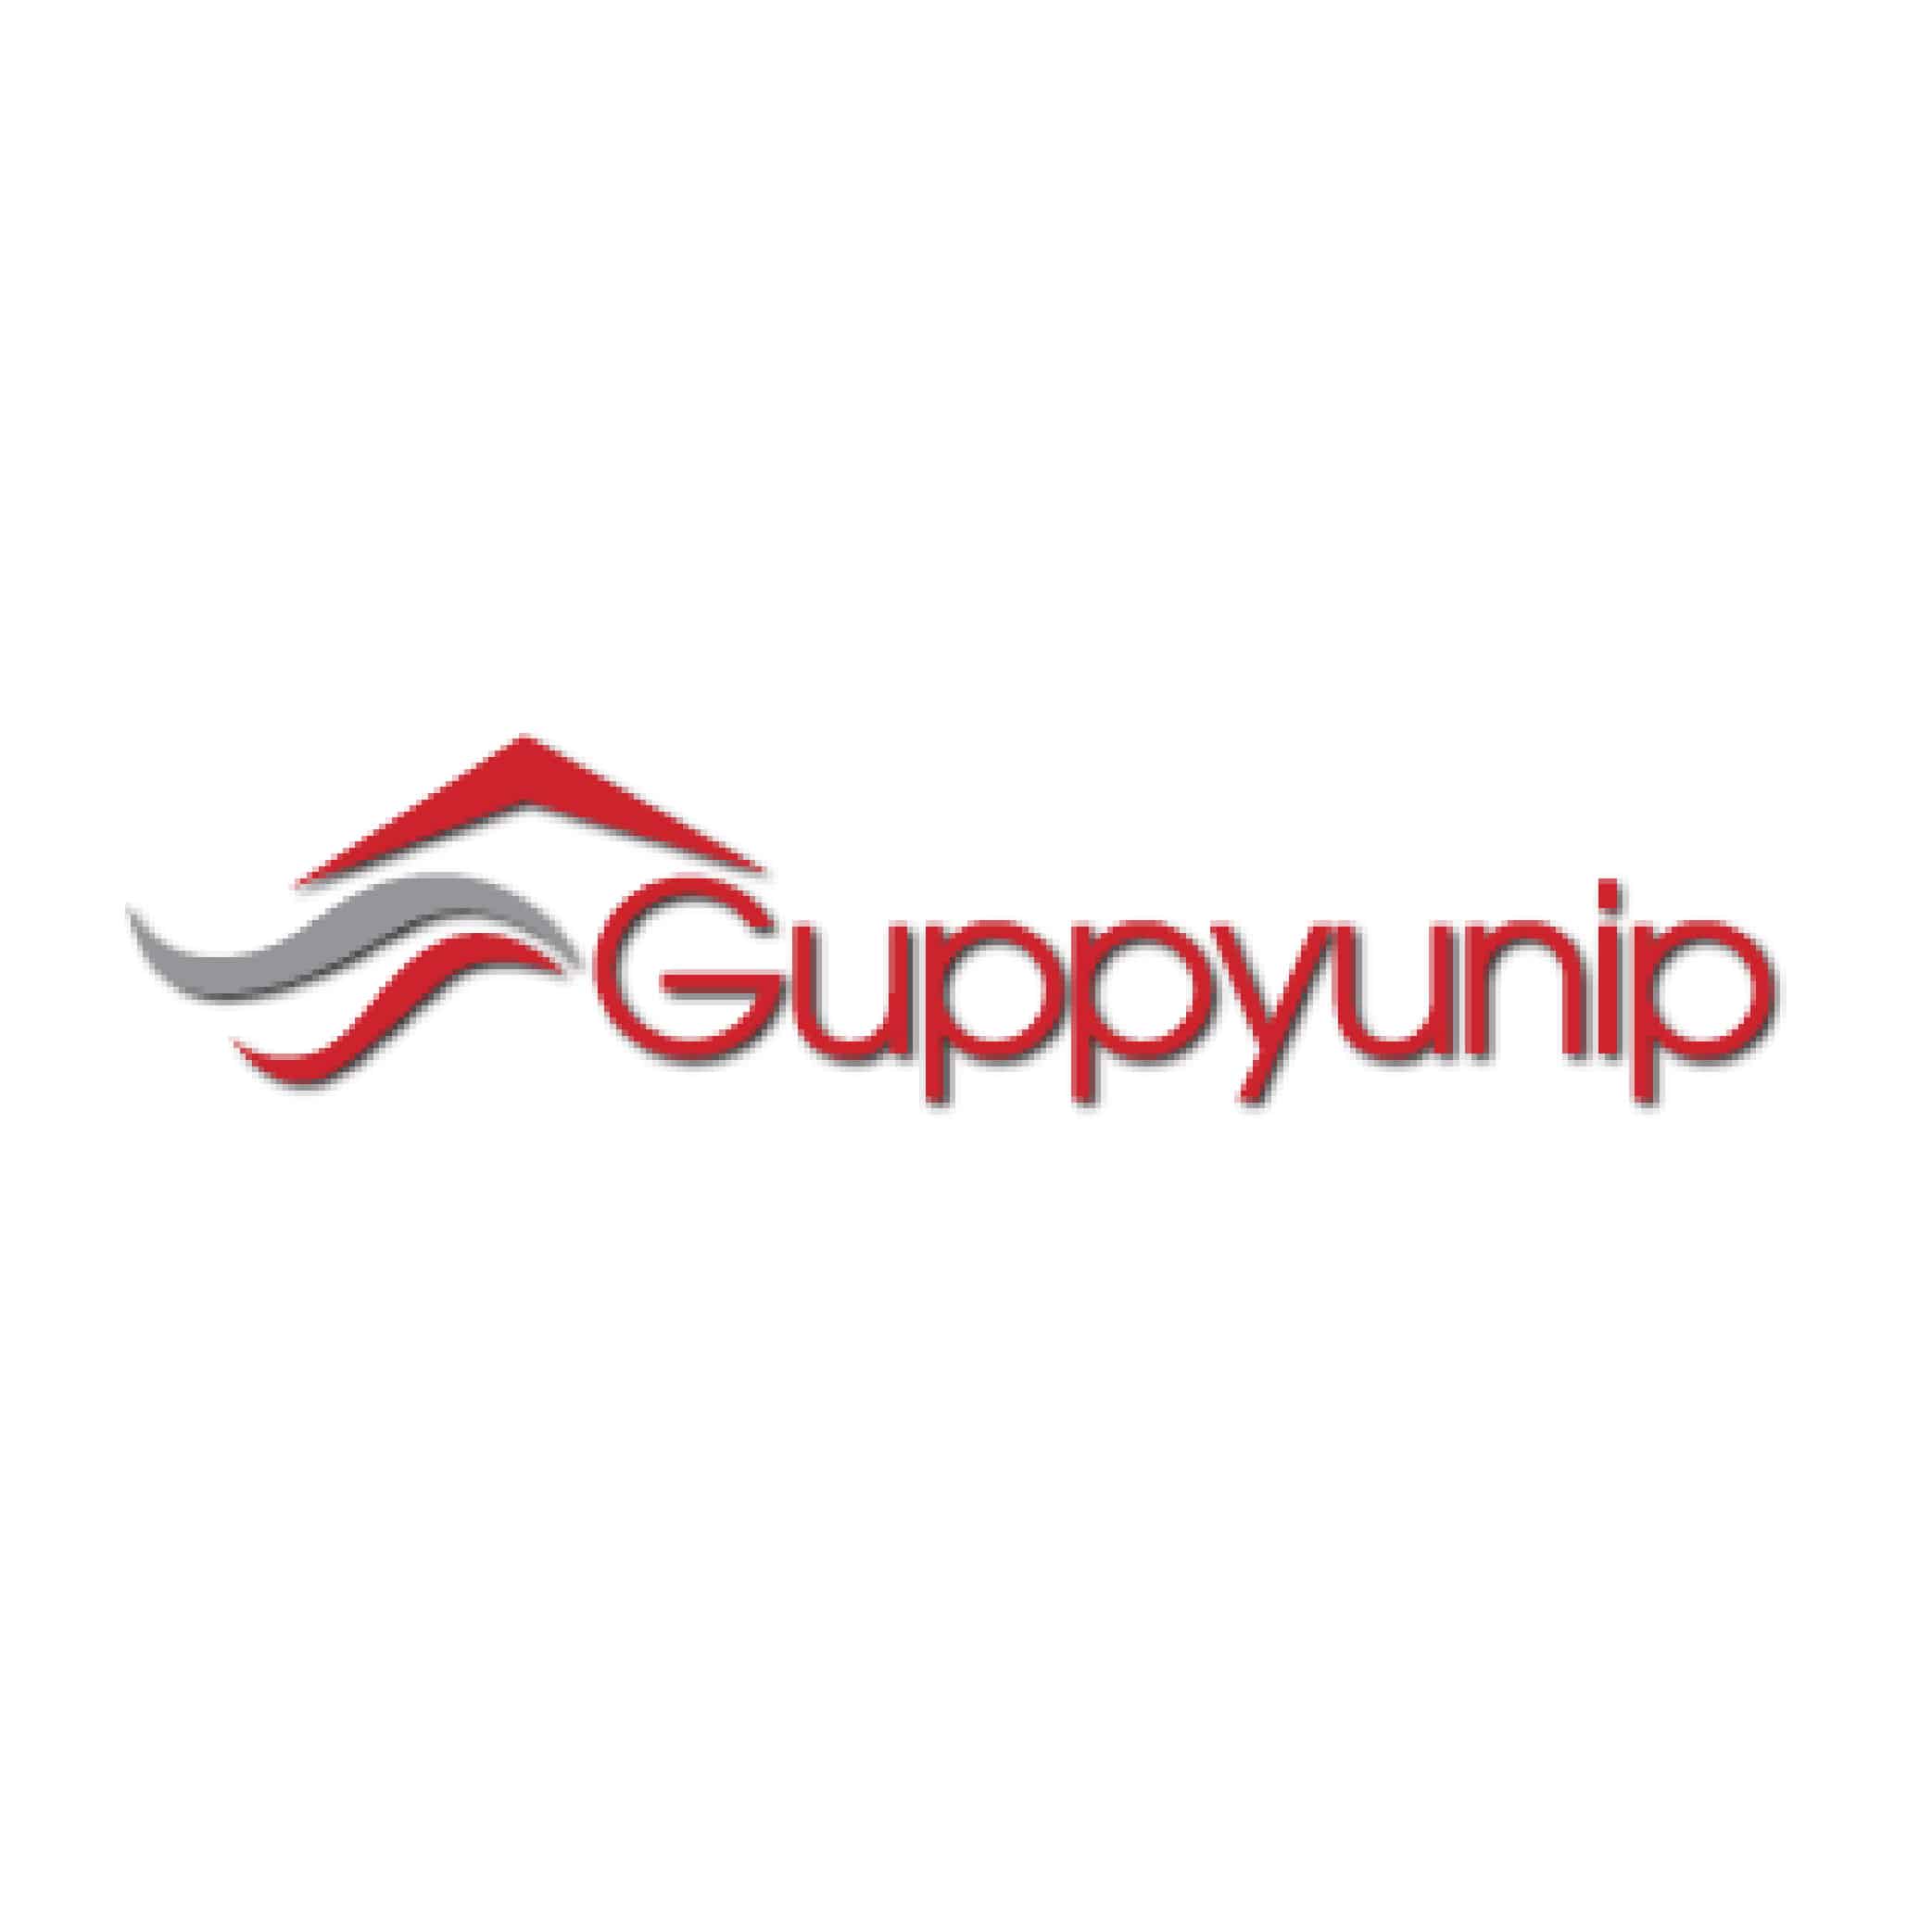 Guppyunip logo